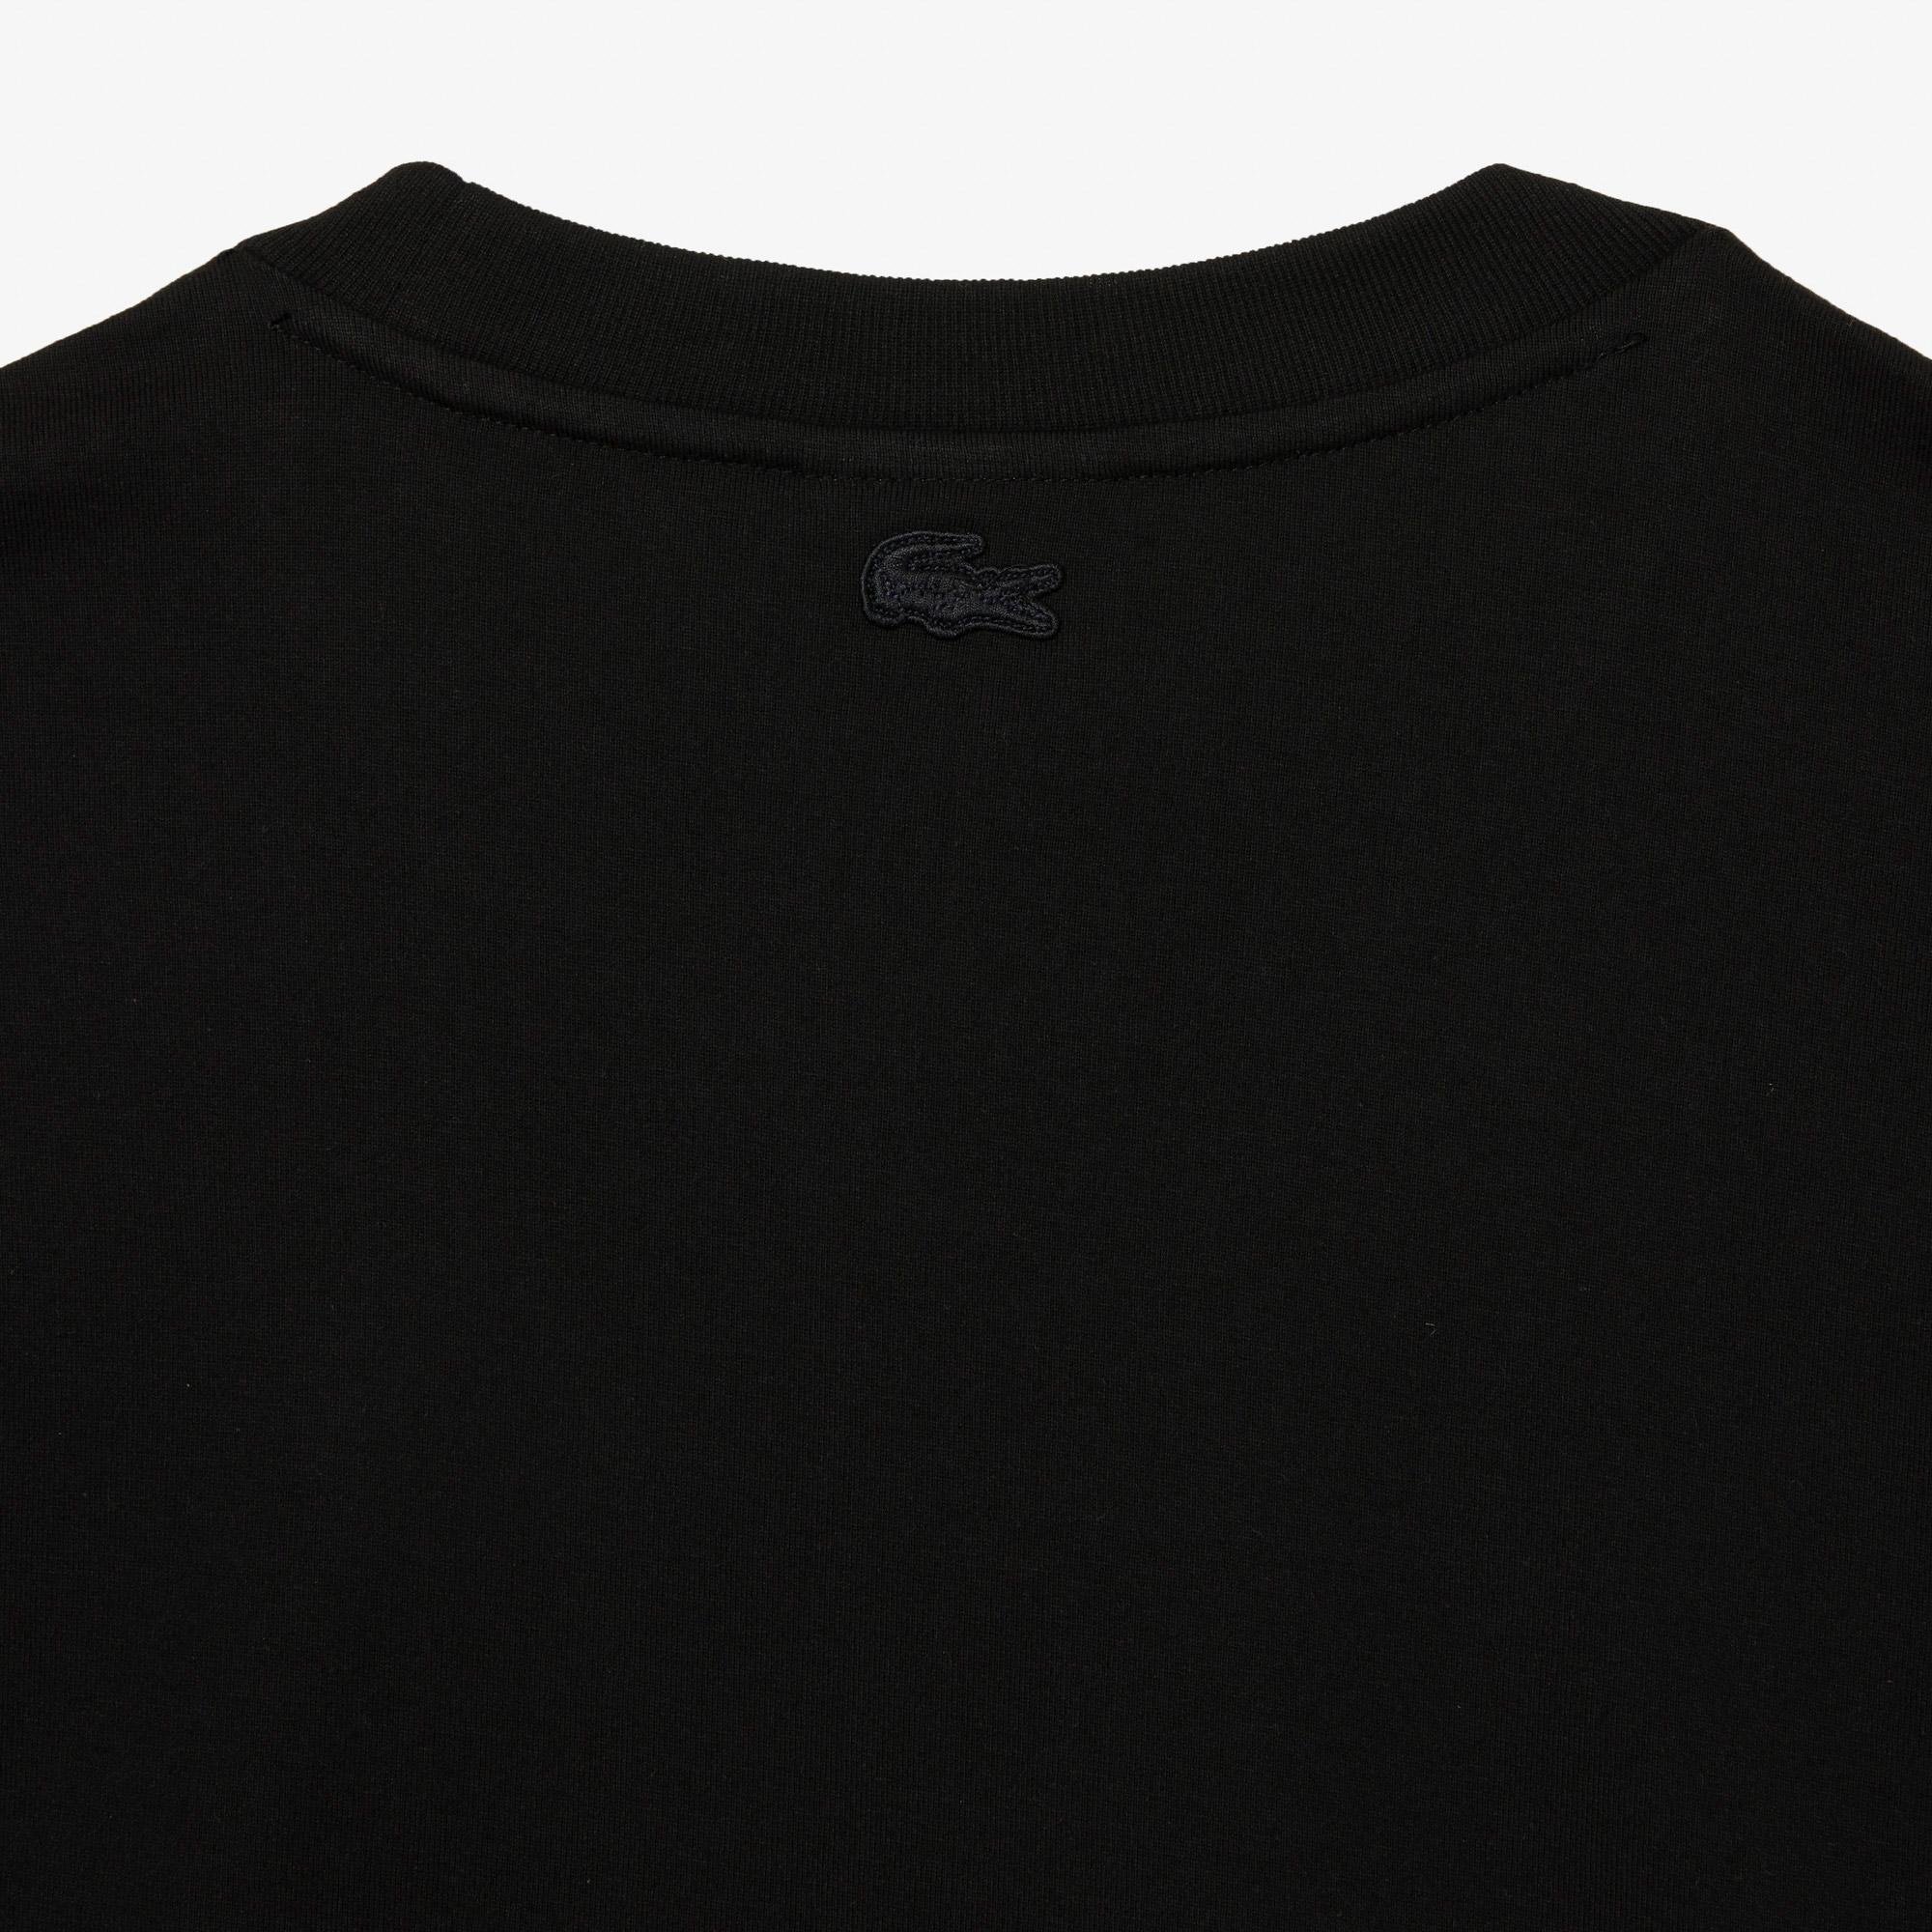 Lacoste x Netflix Erkek Relaxed Fit Bisiklet Yaka Baskılı Siyah T-Shirt. 6